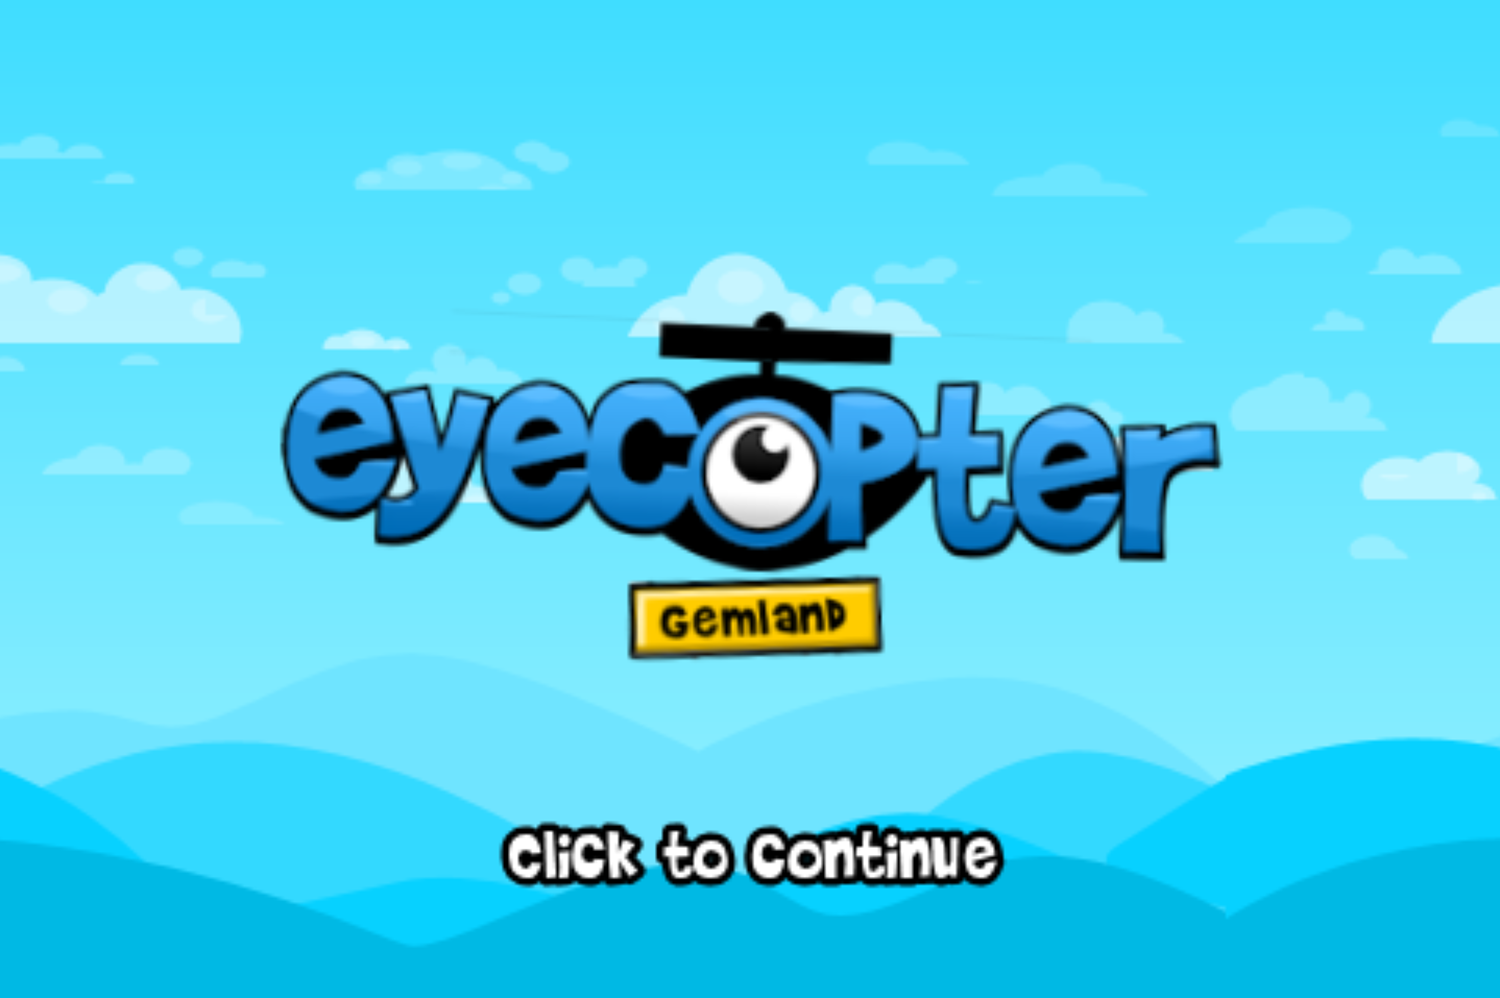 Eyecopter Gemland Game Welcome Screen Screenshot.